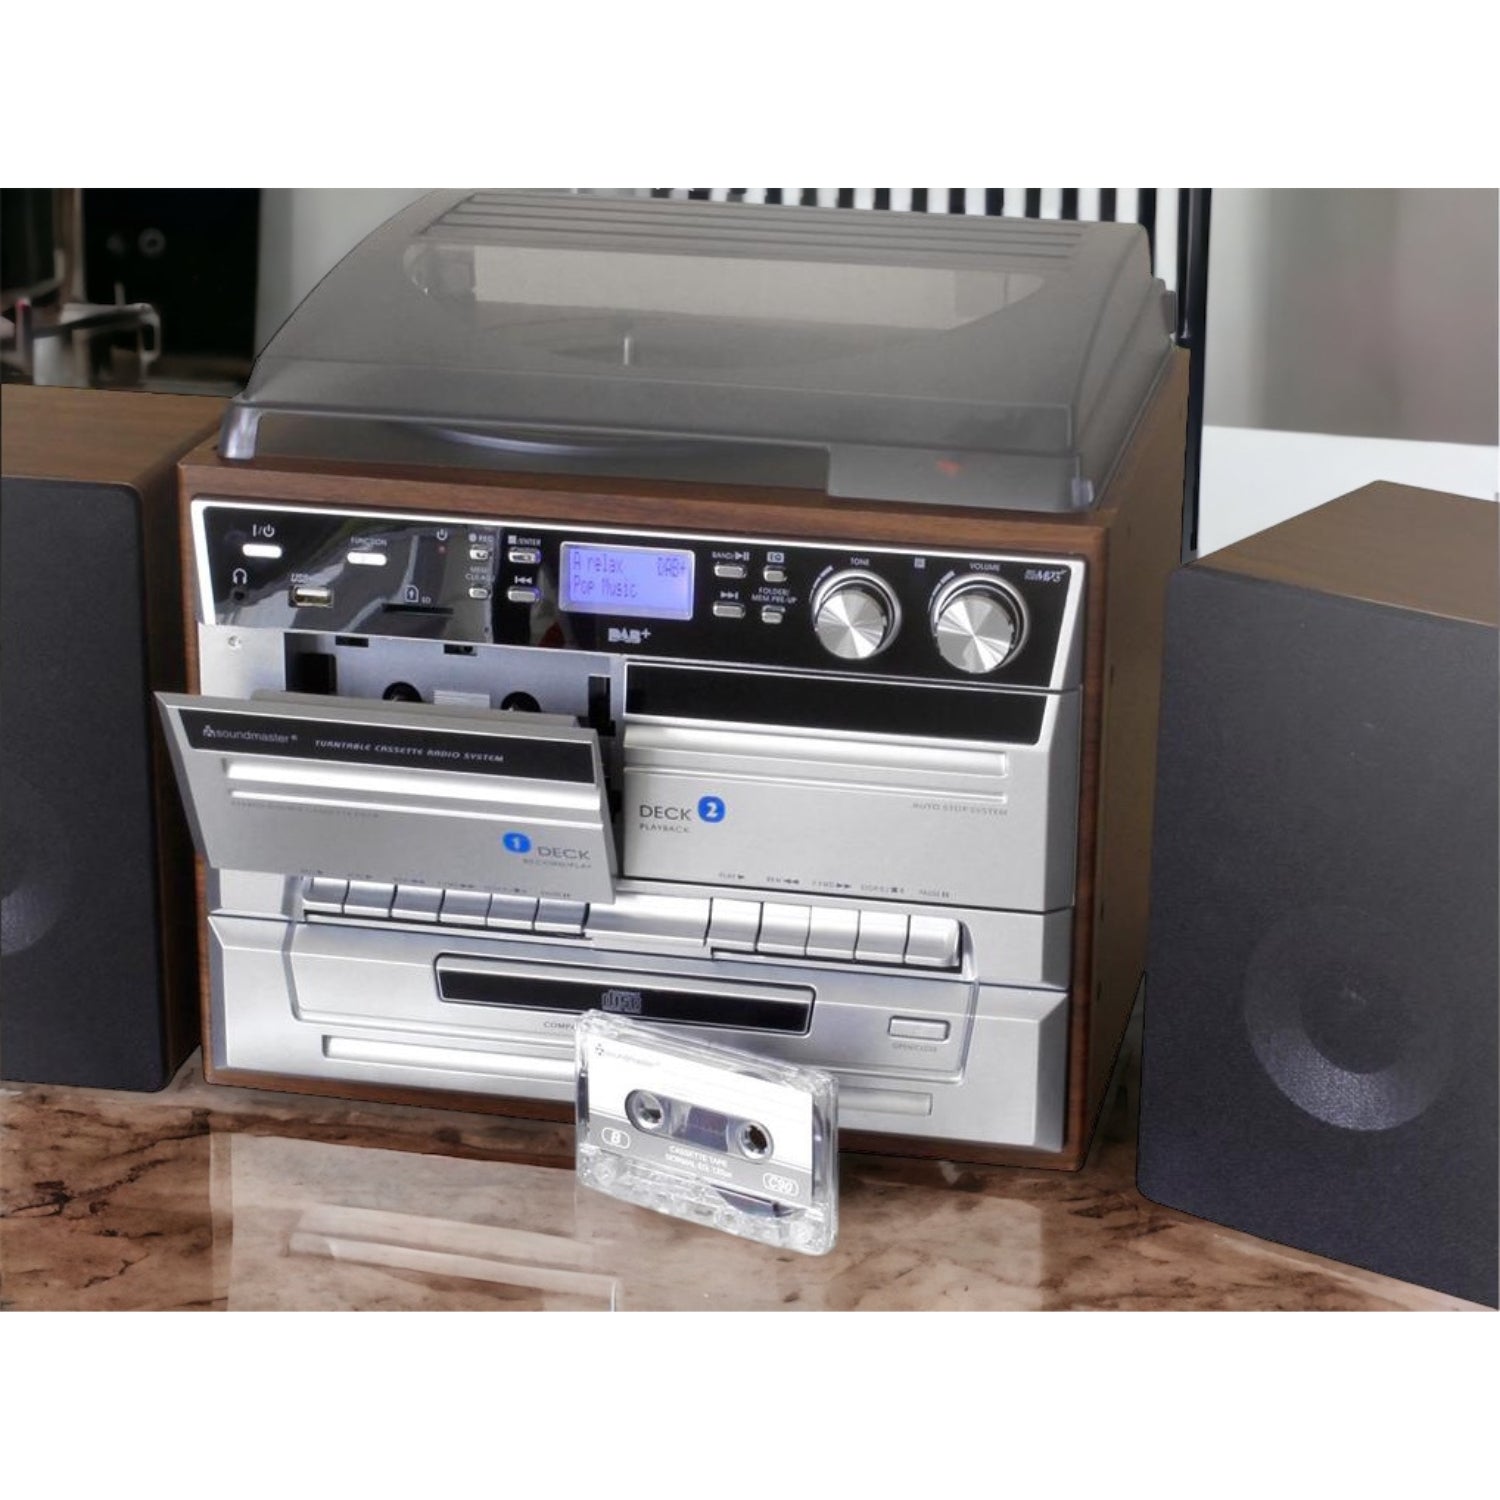 Soundmaster MCD5550DBR système stéréo DAB + double cassette Bluetooth CD MP3 platine vinyle encodage USB numérisation